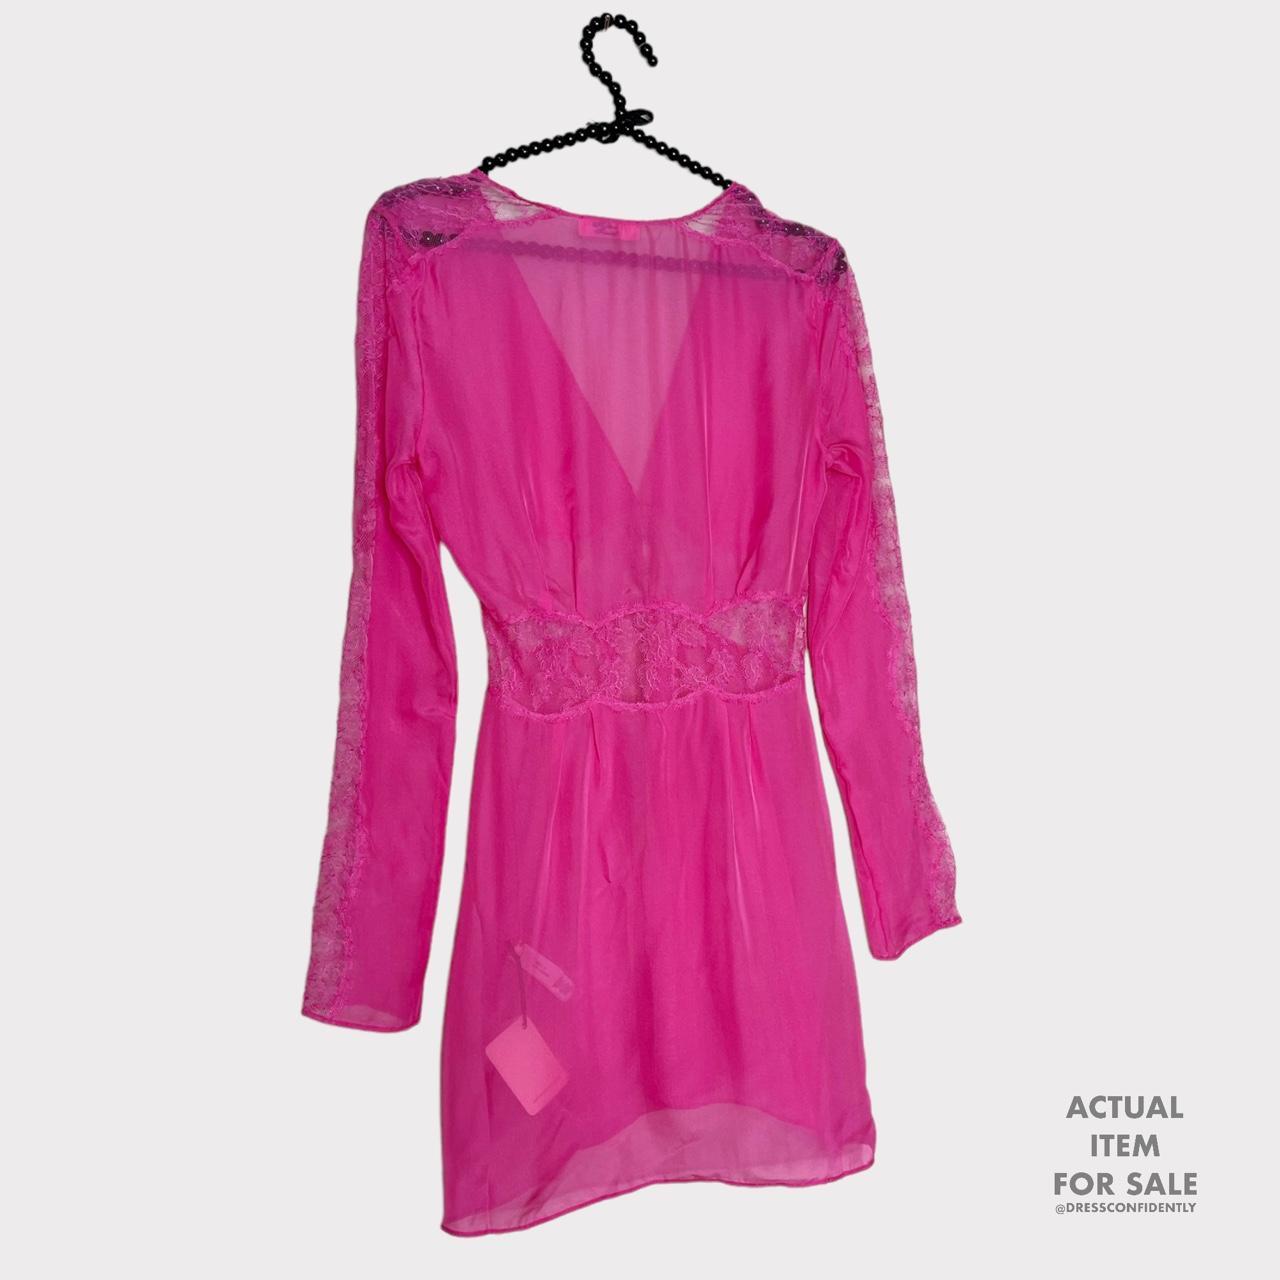 Agent Provocateur Women's Pink Nightwear (2)